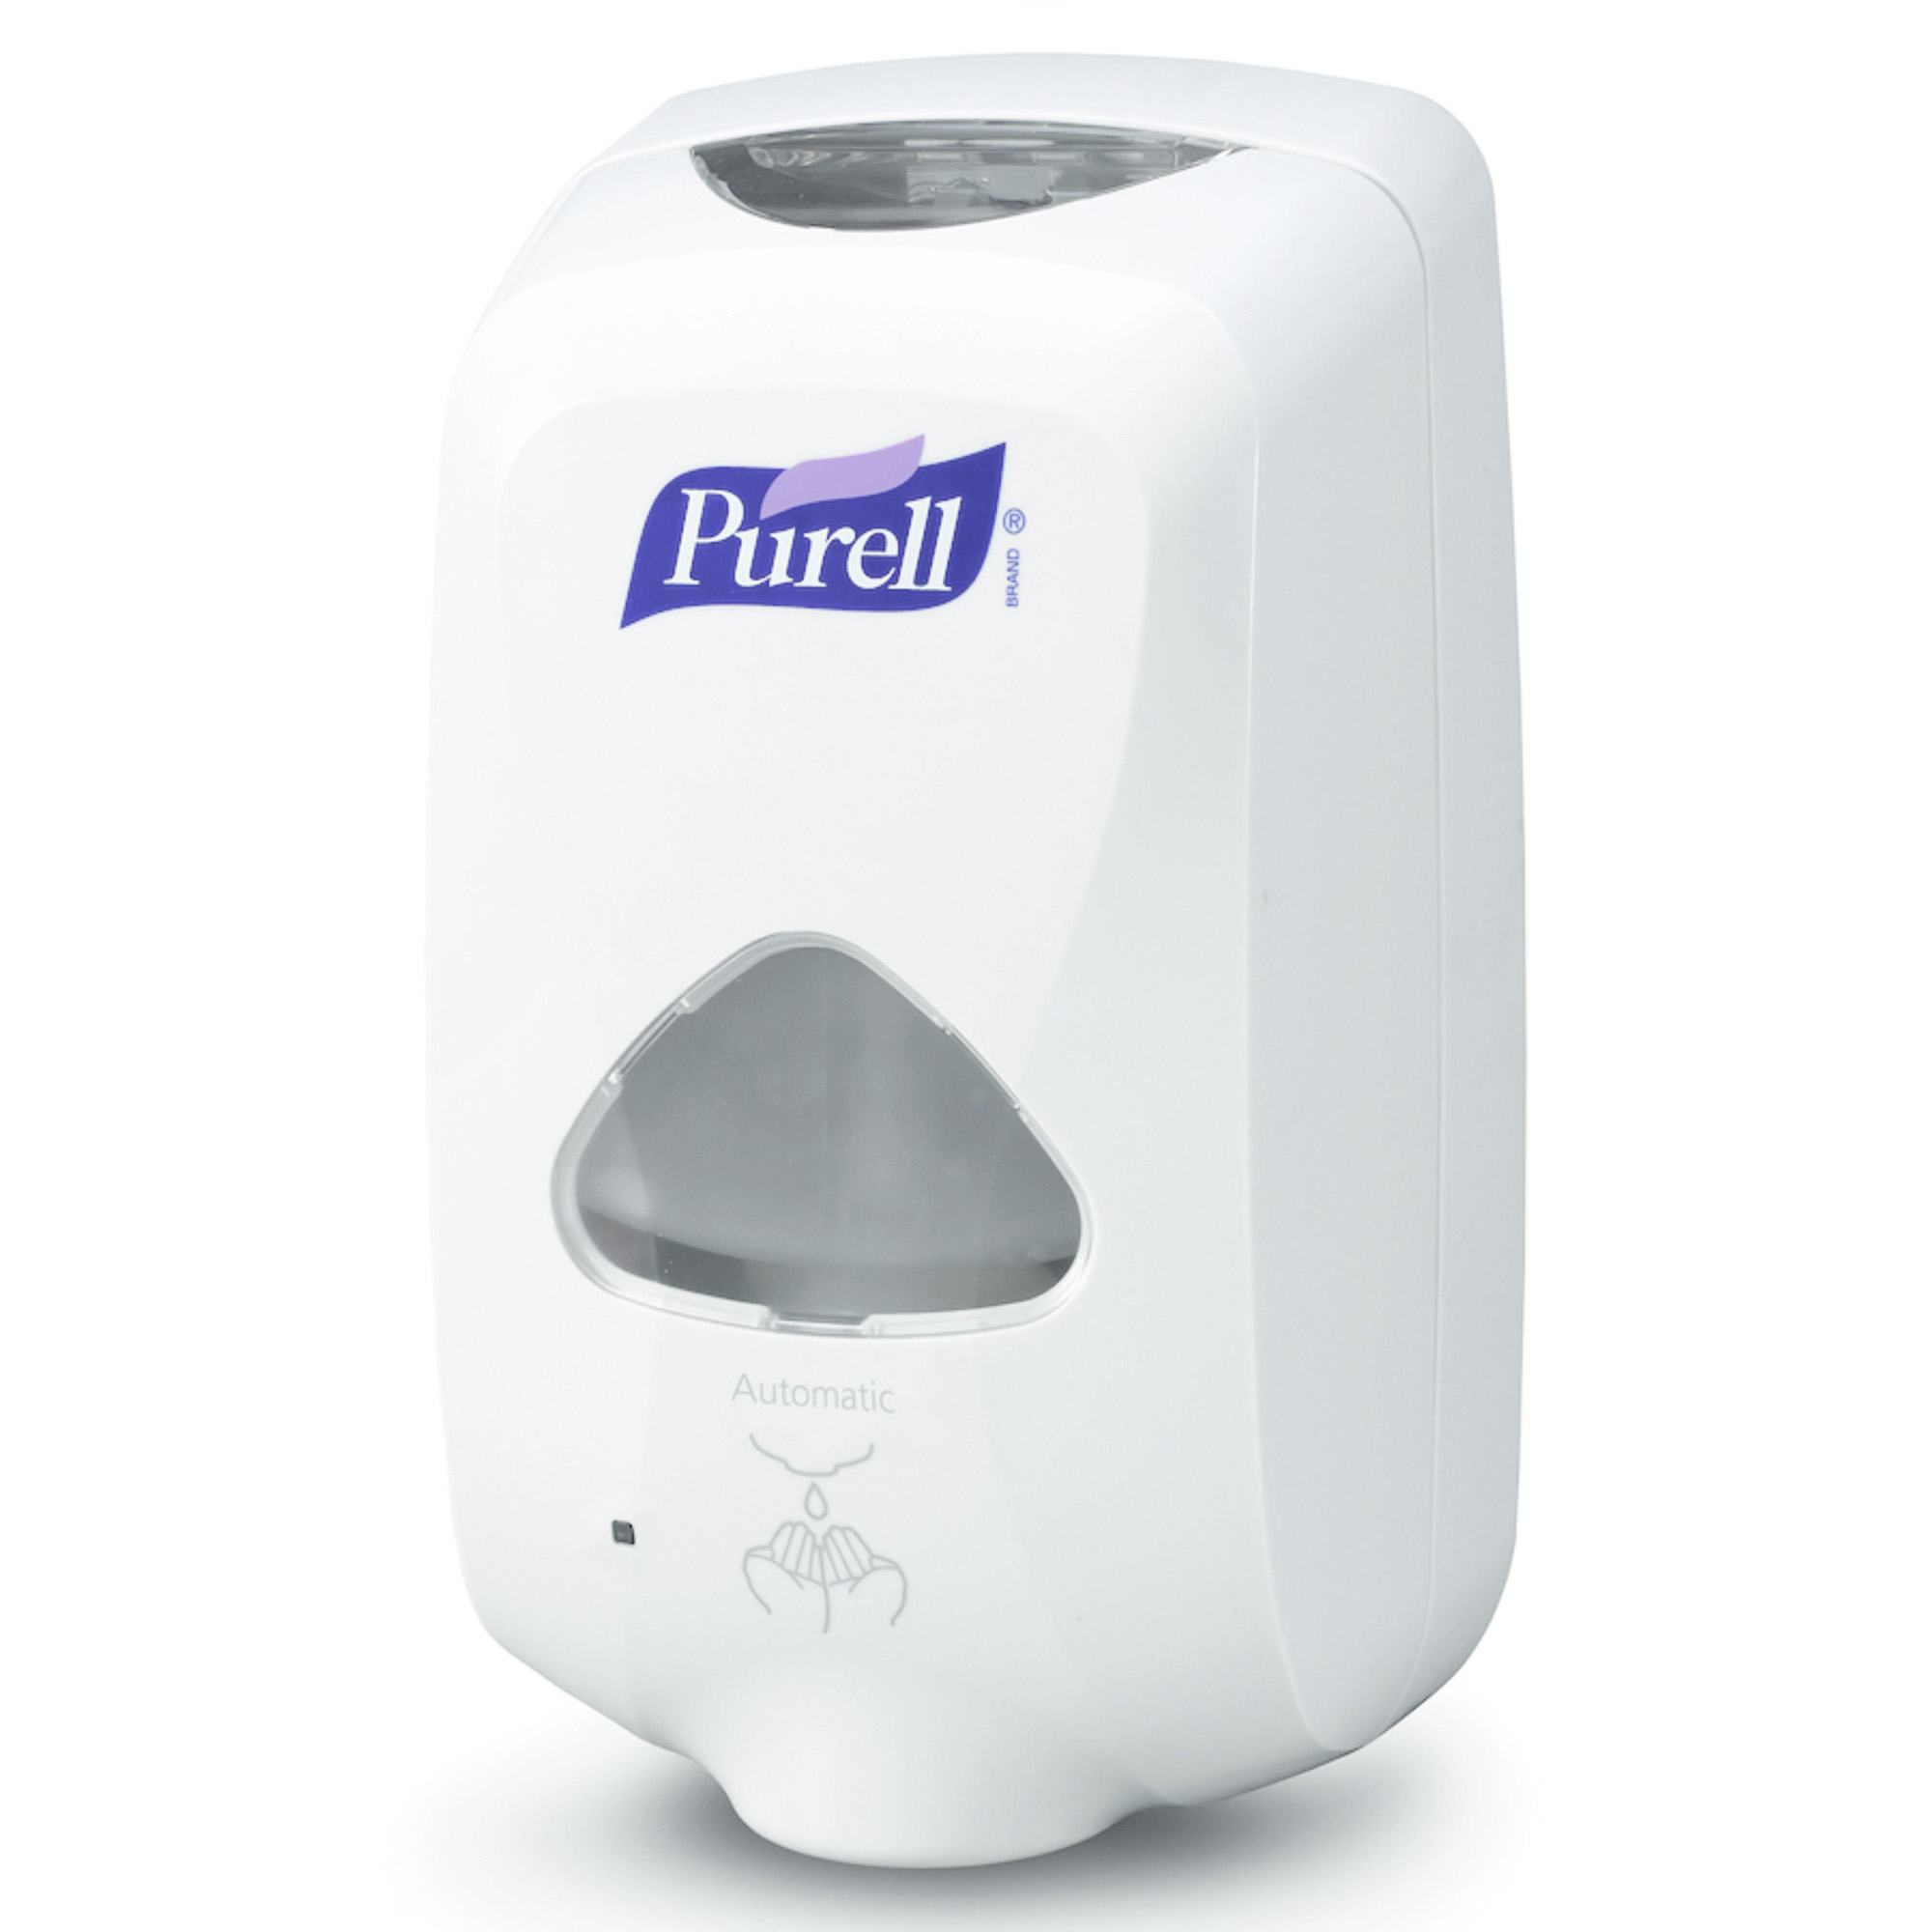 Purell Touch Free 2720-12 color blanca automática TFX sanitizante